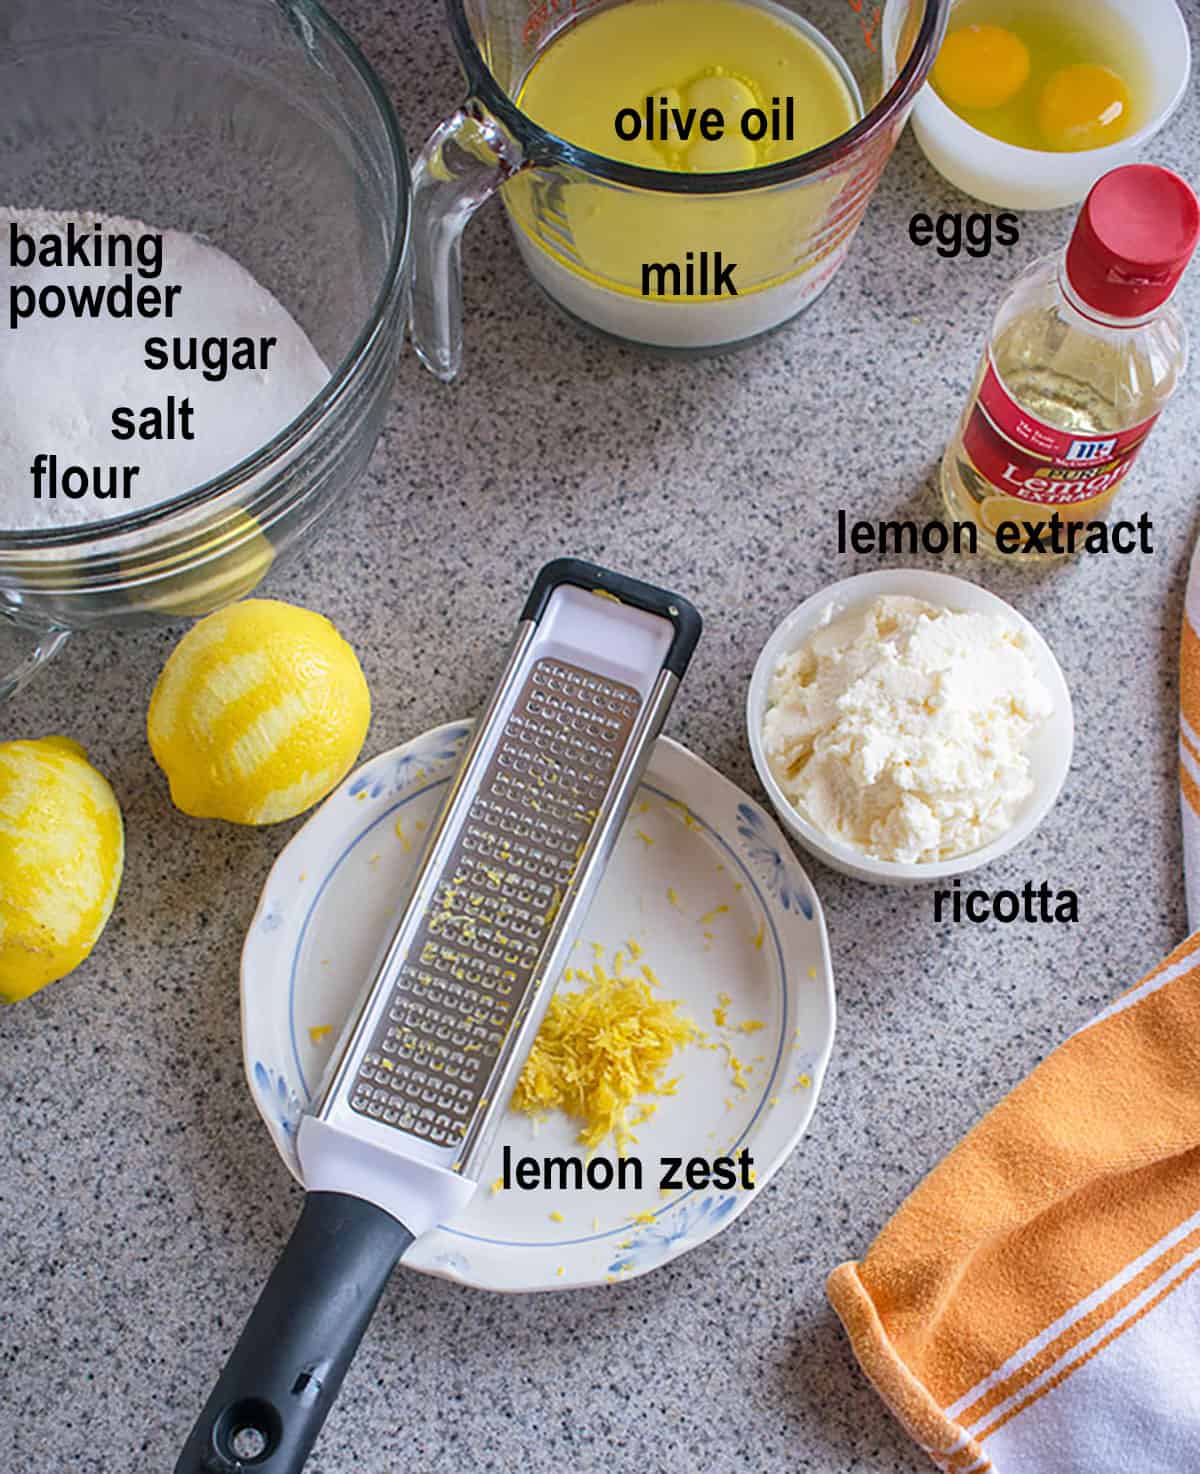 oil, milk, eggs, baking powder, sugar, salt, flour, lemon extract, ricotta, zest